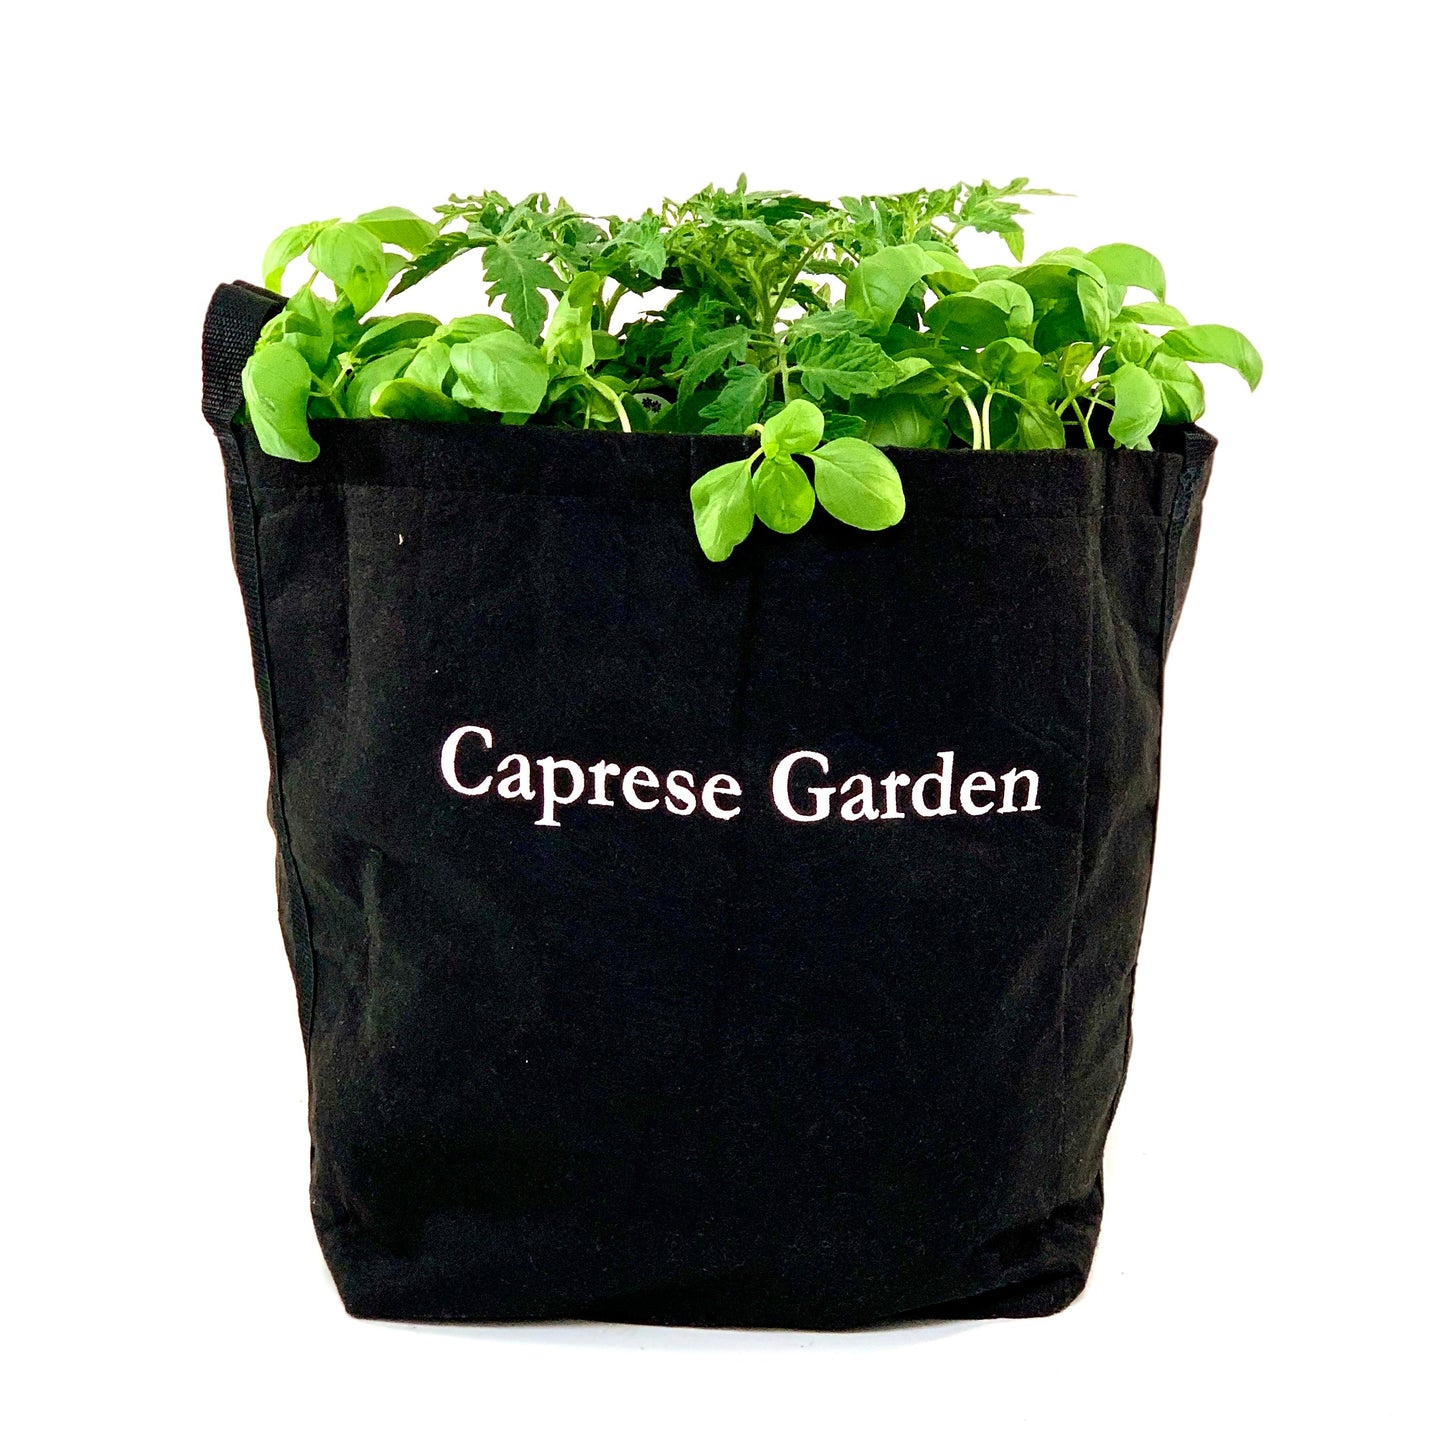 Caprese Garden Gift Set with Paula Lambert Book